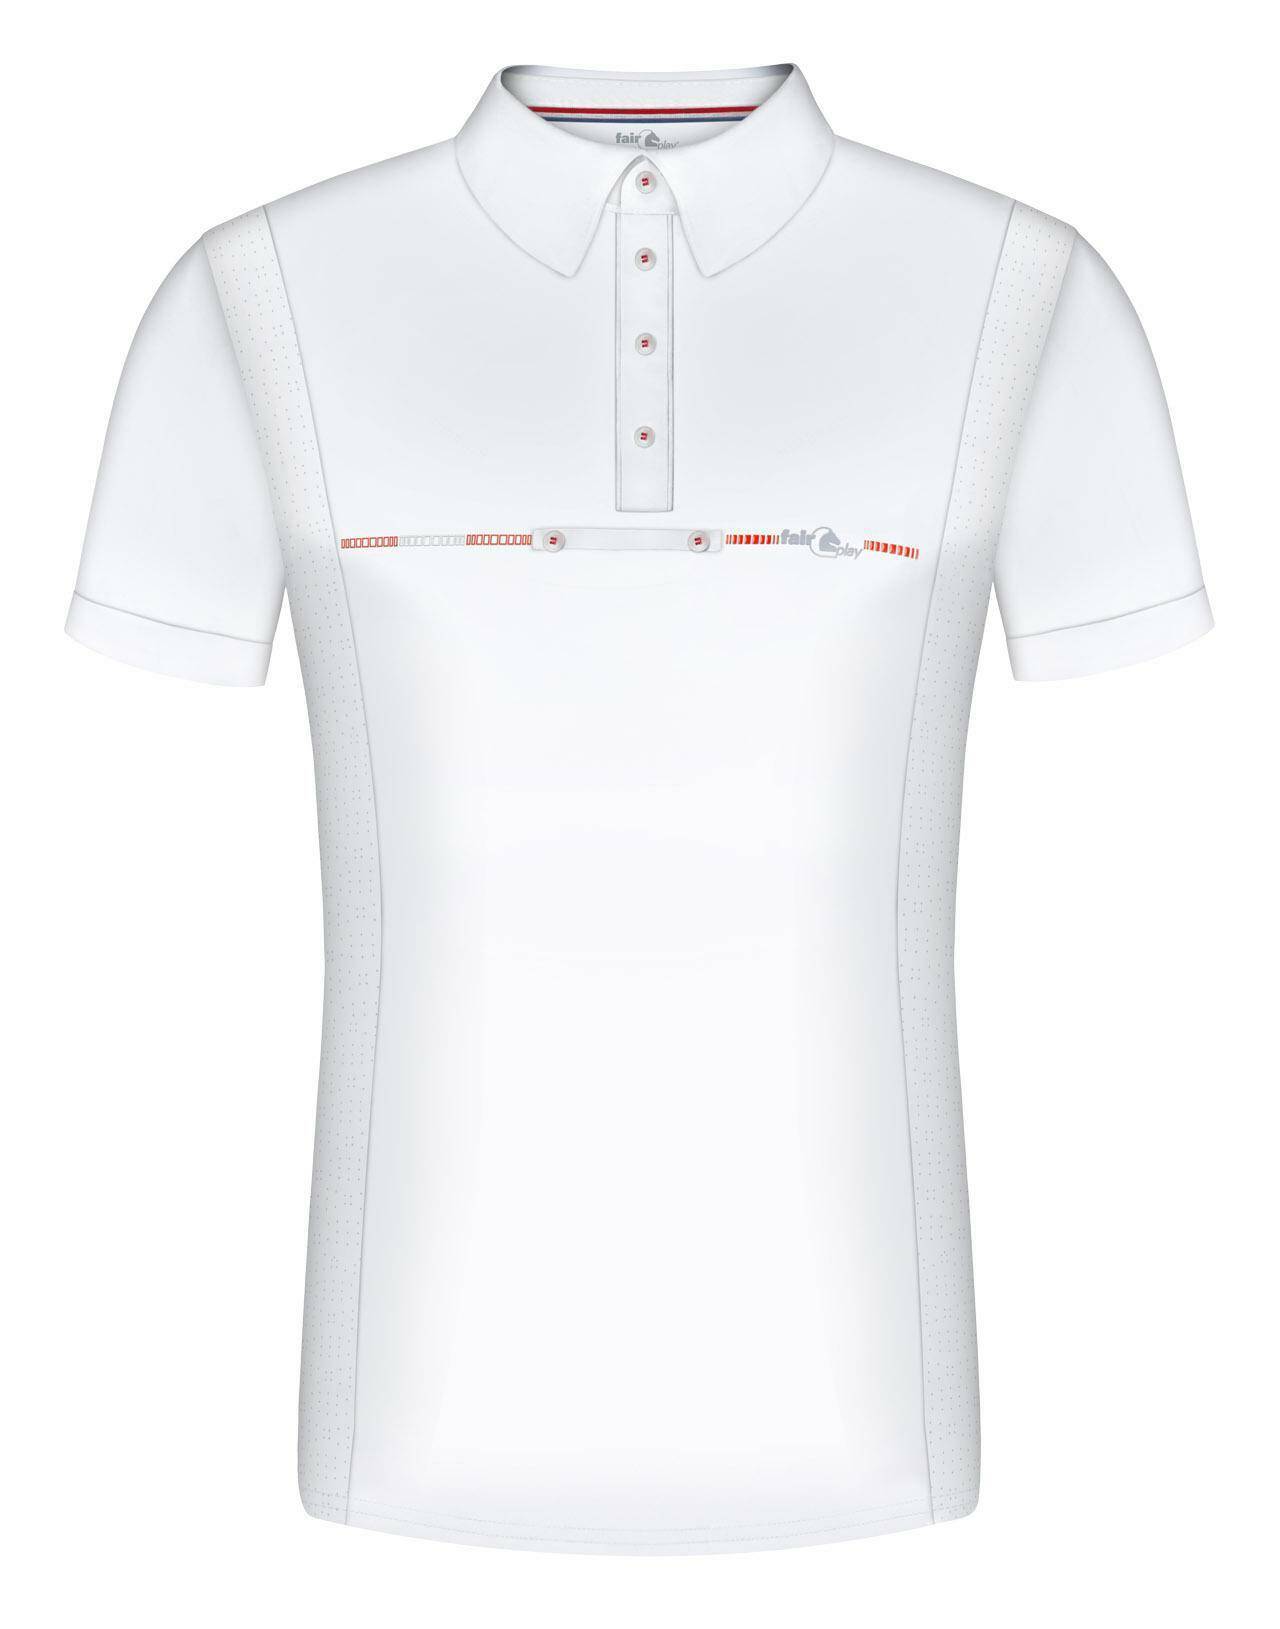 Koszulka konkursowa FP DAVID biały  46